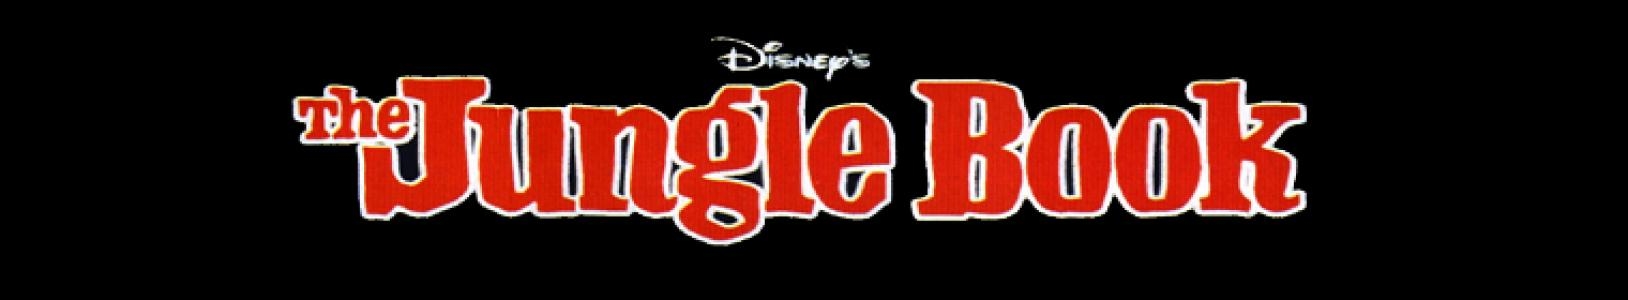 Disney's The Jungle Book banner